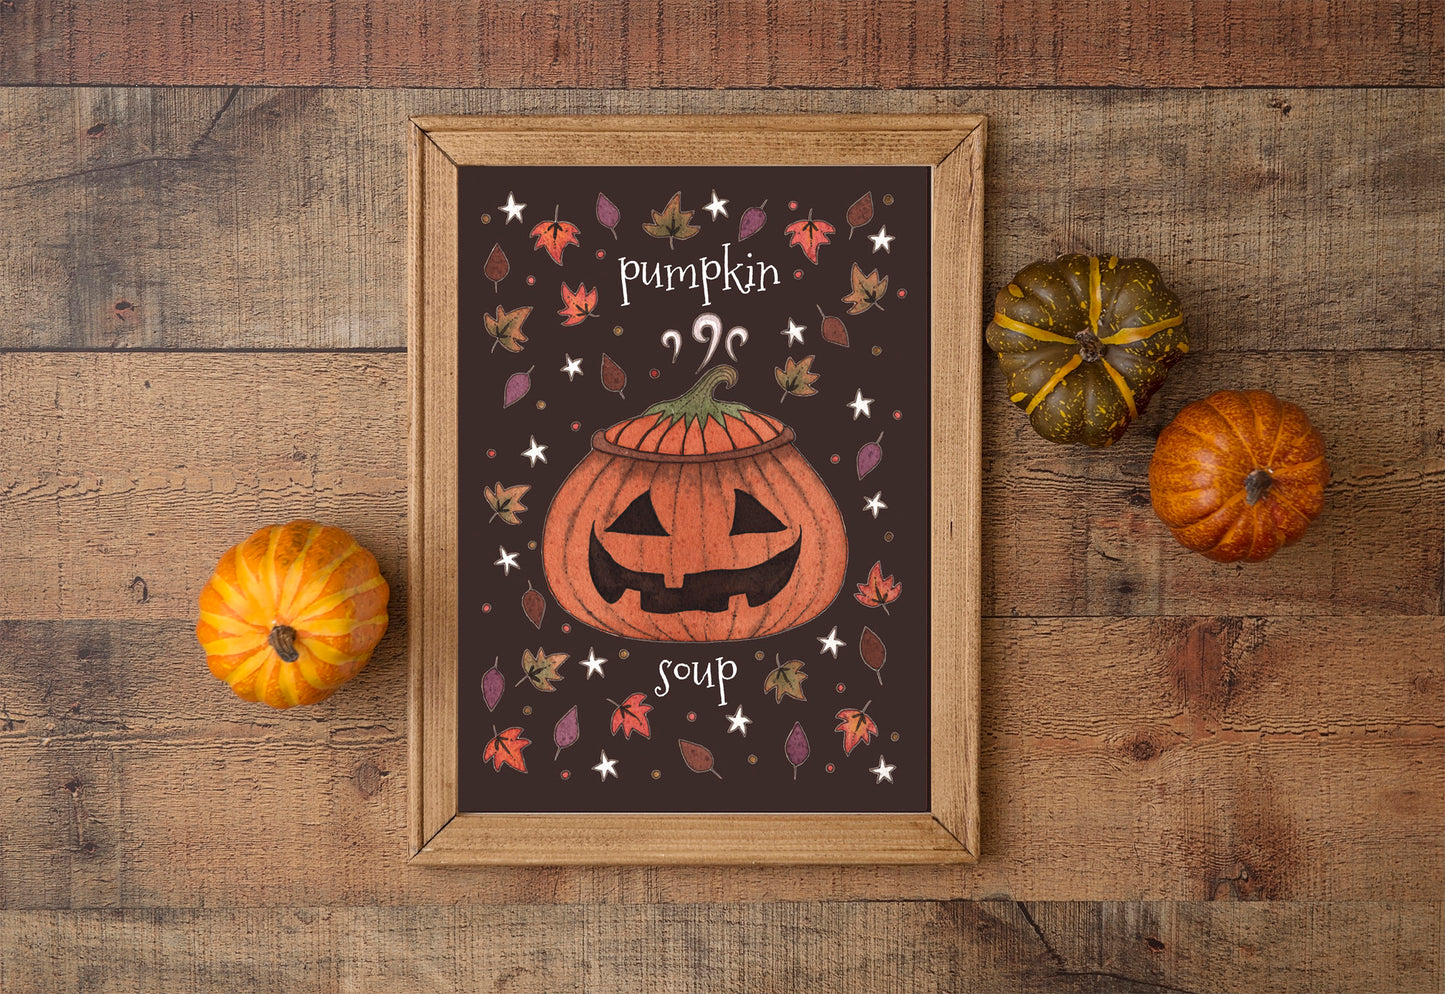 Pumpkin Soup Print - Cosy Halloween Pumpkin Illustration A5 - A4 - A3 Kitchen Wall Art - Spooky Orange Pumpkin Jack-O-Lantern Decoration